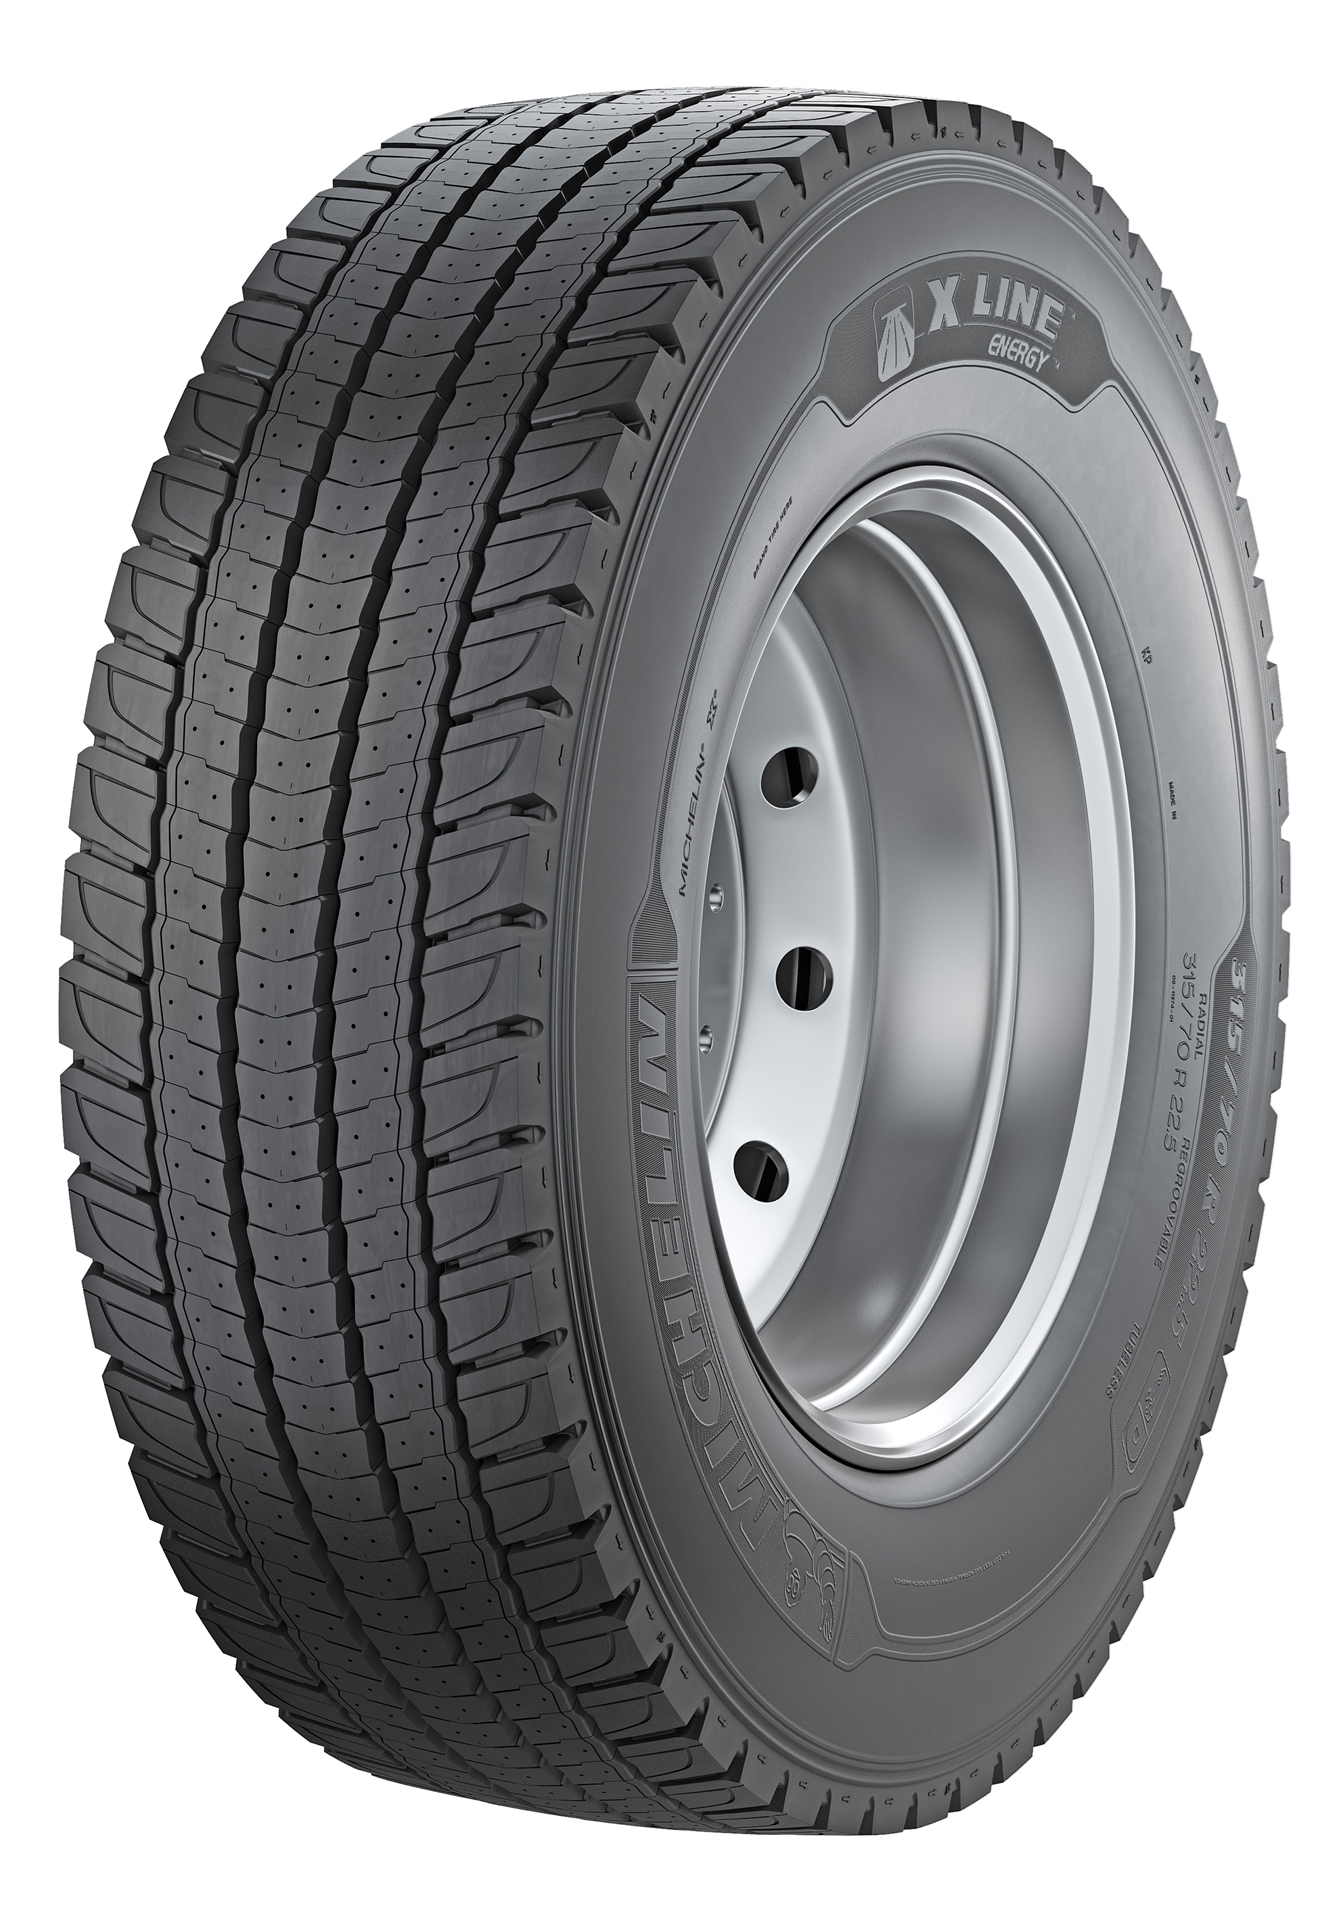 Gomme Nuove Michelin 295/60 R22.5 150/147K X LINE ENERGY D S60 M+S (8.00mm) pneumatici nuovi Estivo